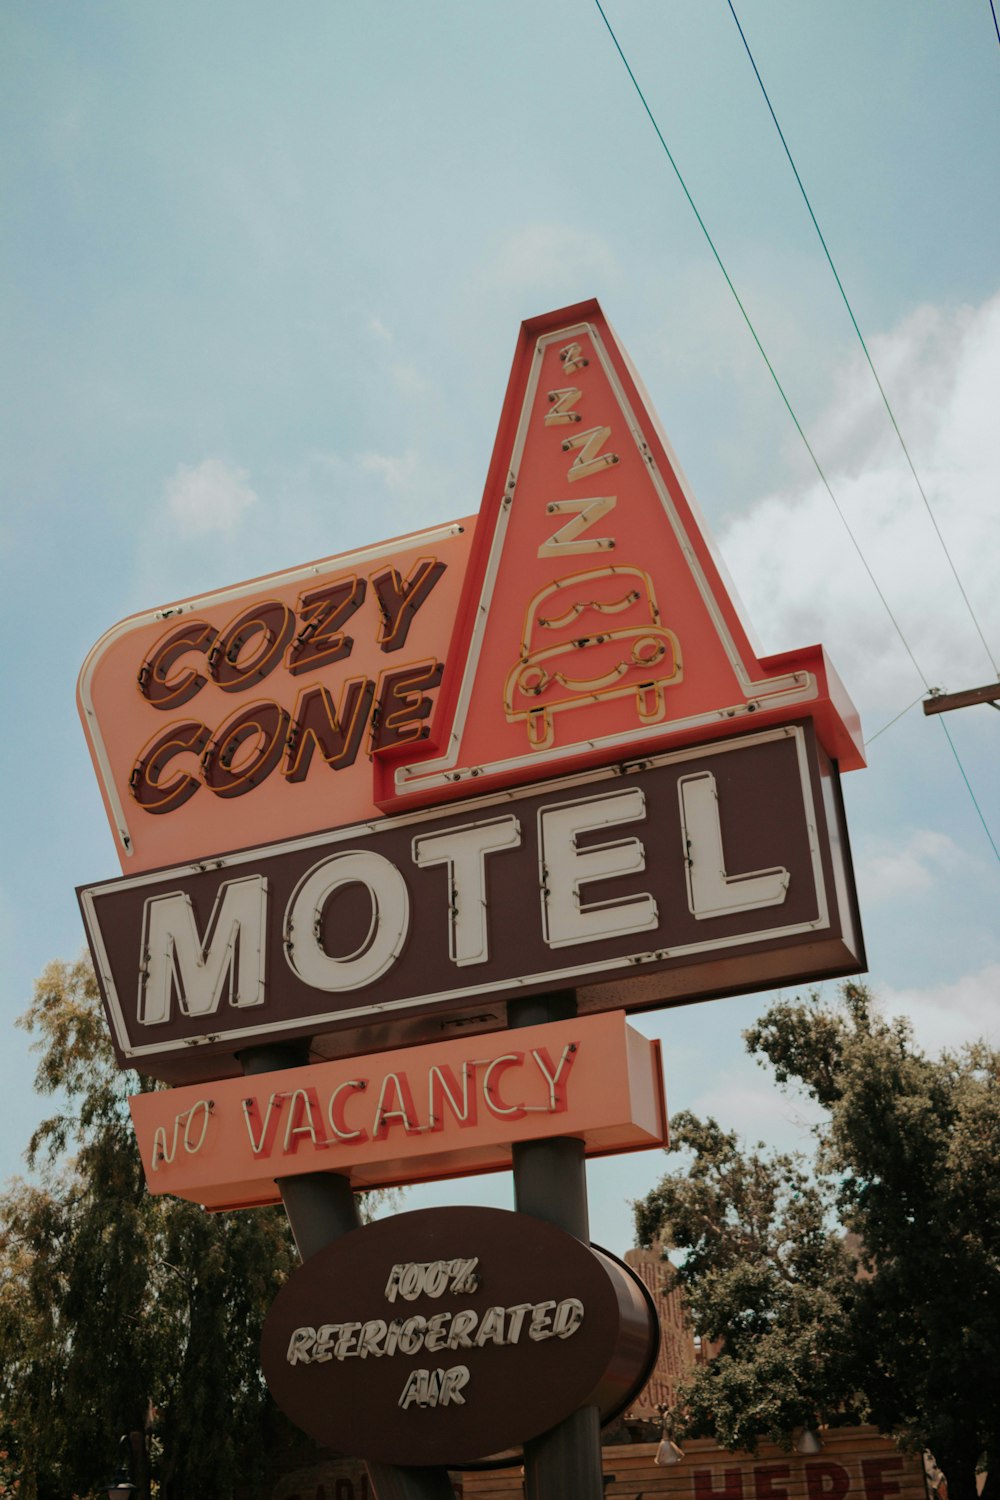 Straßenschild Cozy Cone Motel